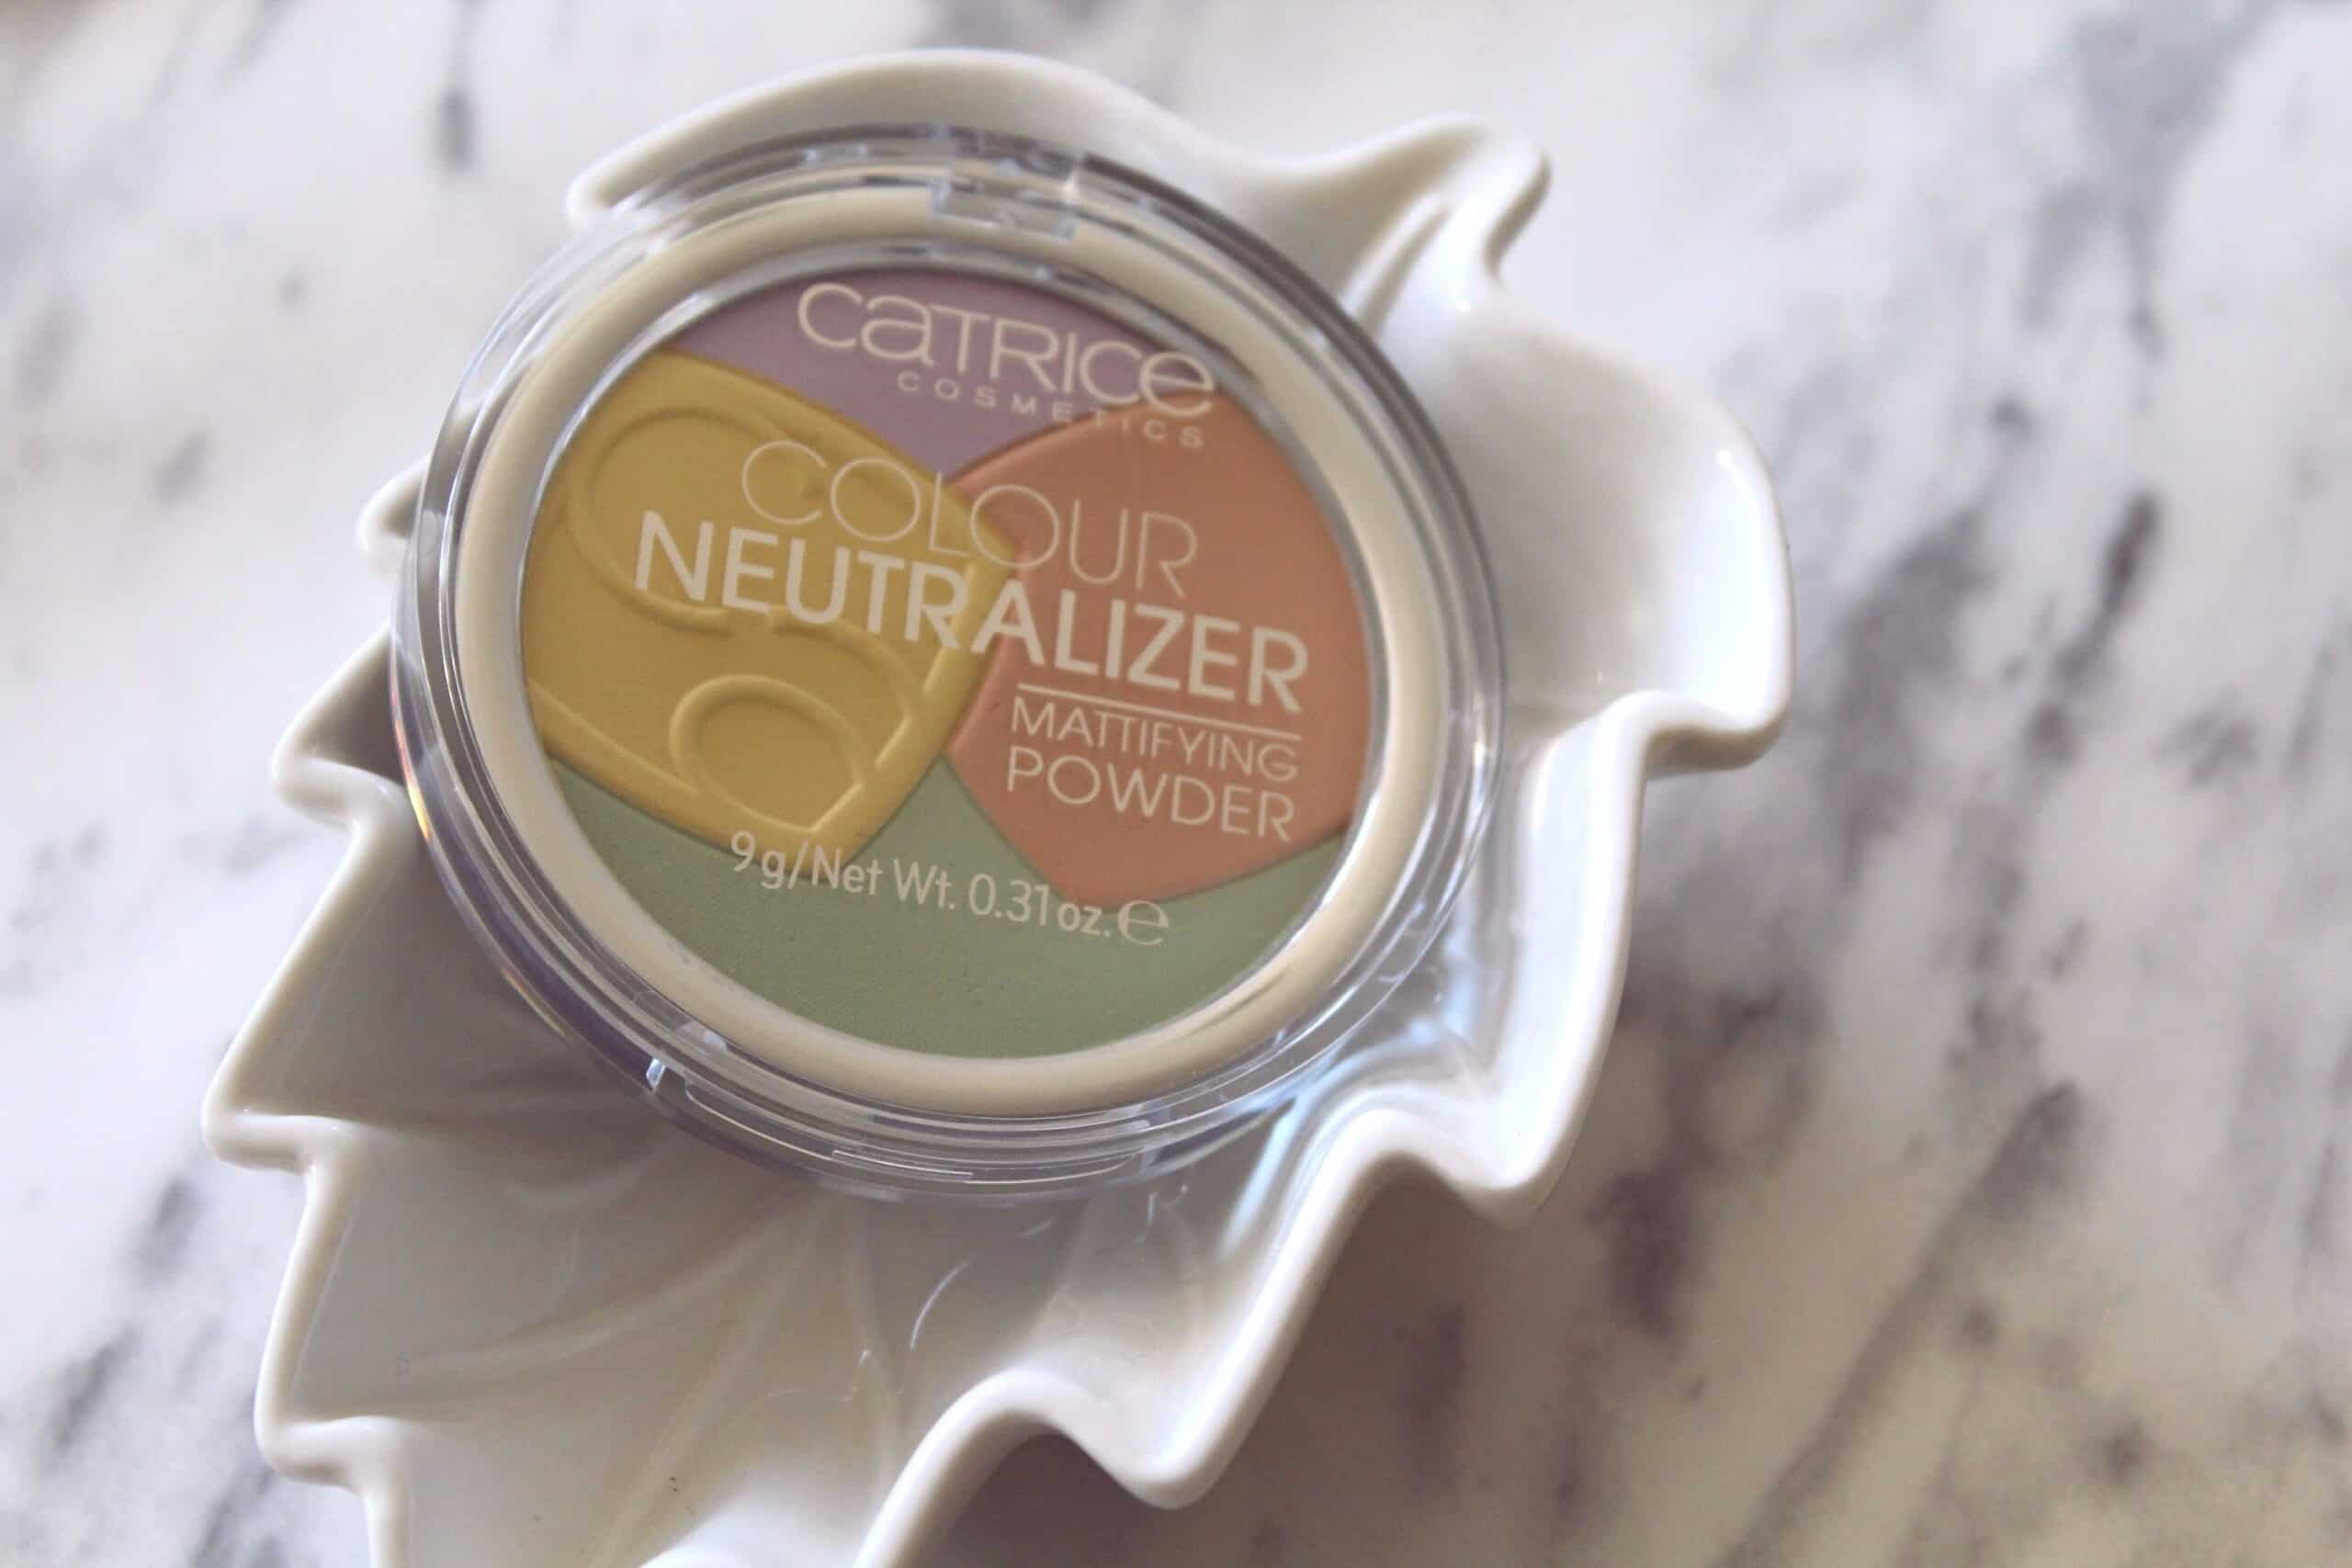 Catrice-Colour-Neutralizer-Mattifying-Powder